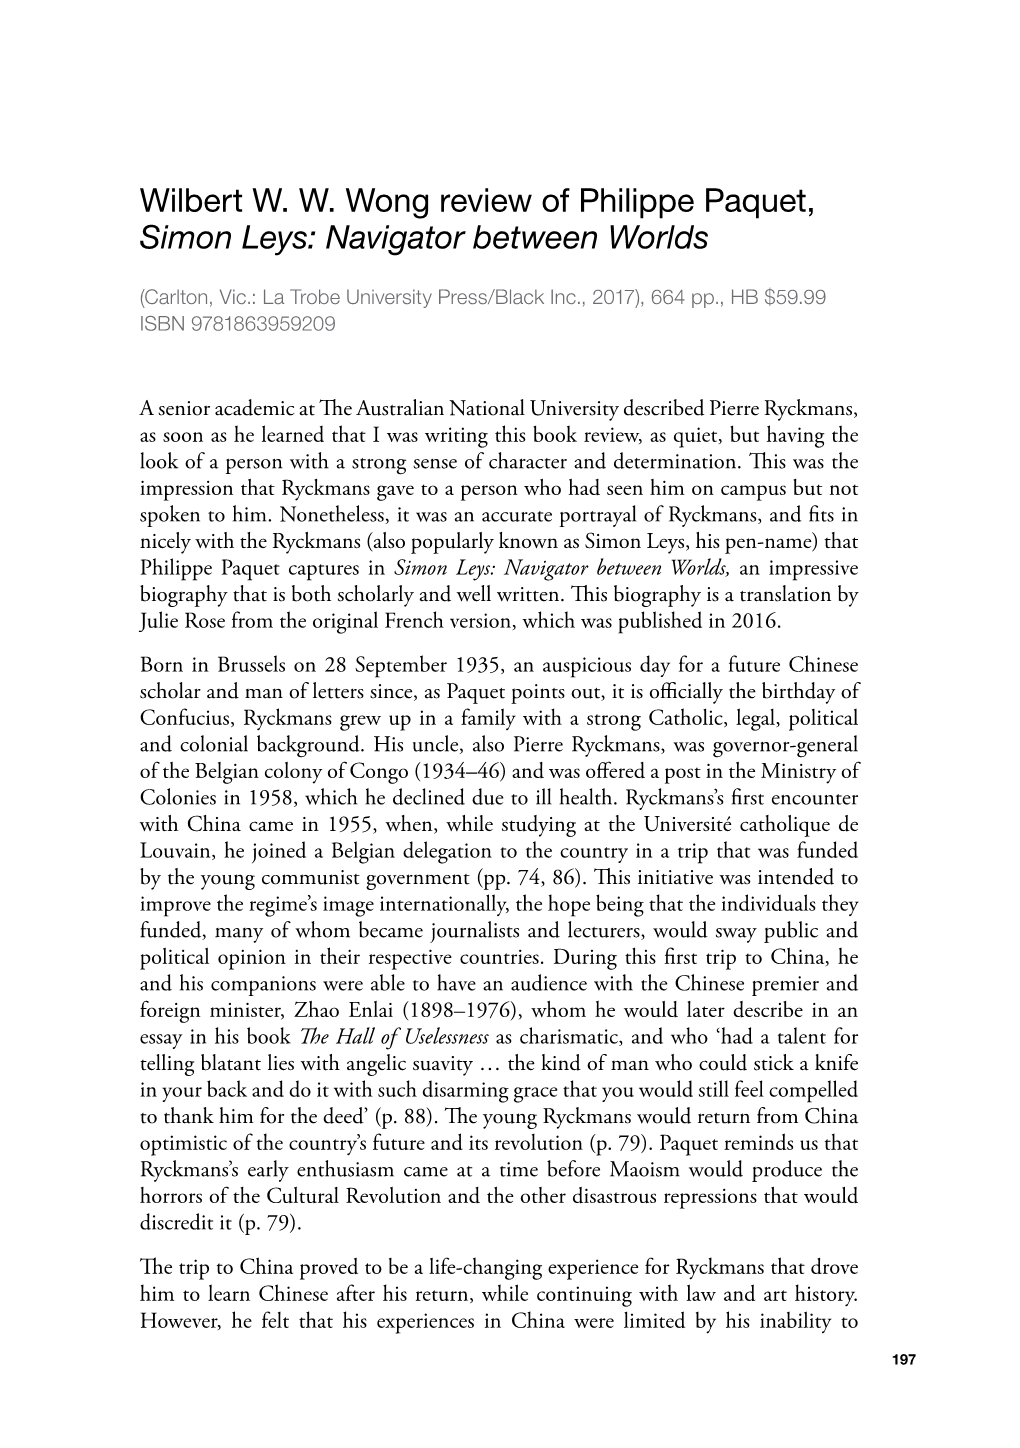 Wilbert W. W. Wong Review of Philippe Paquet, Simon Leys: Navigator Between Worlds